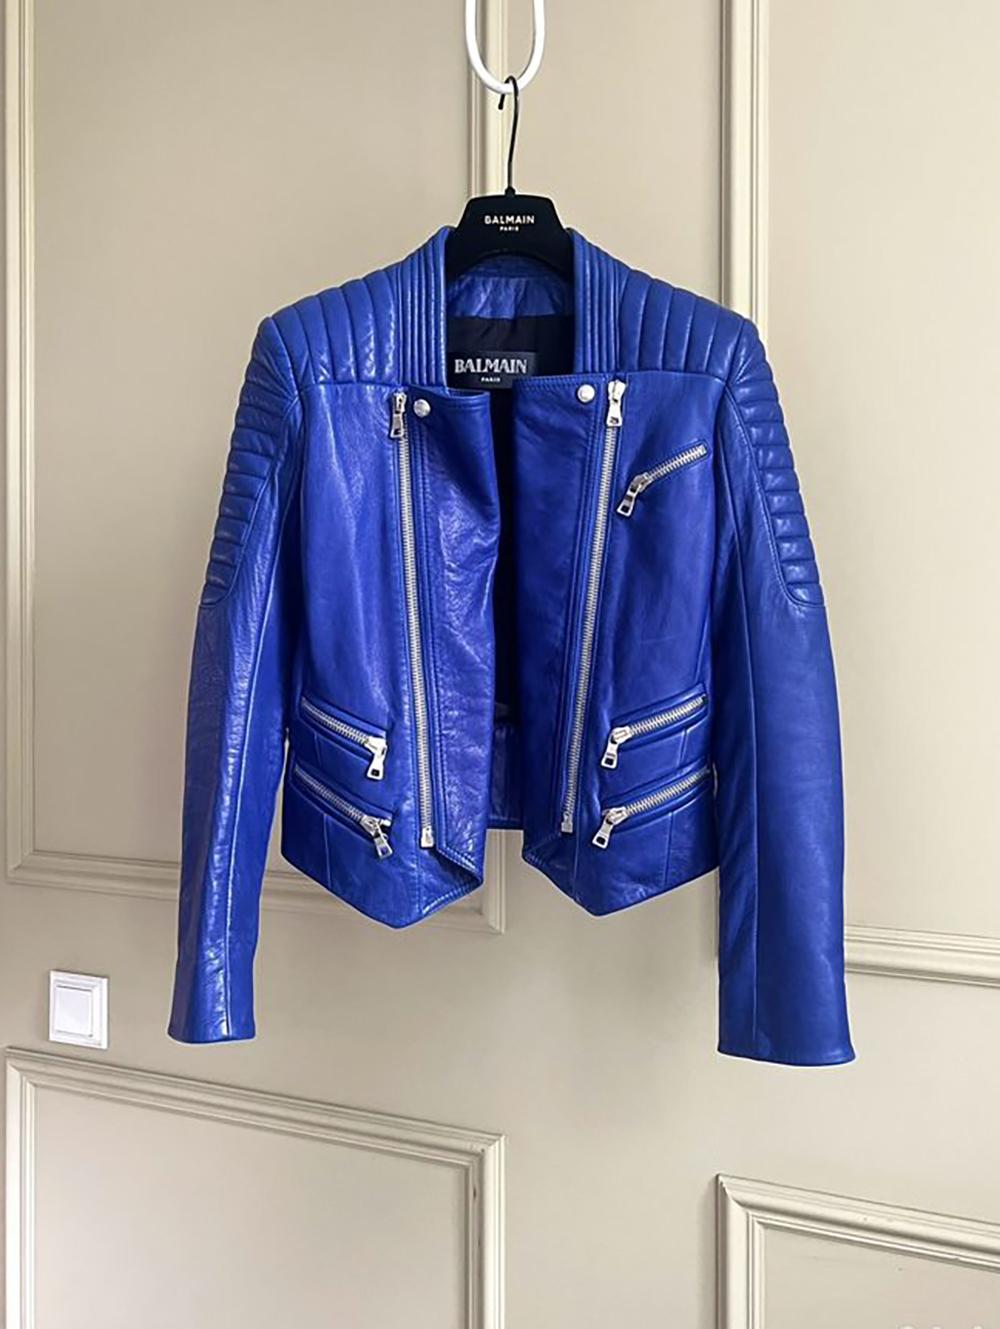 Iconic Balmain leather biker jacket in royal blue colour!
Size mark 36 FR. Kept unworn.